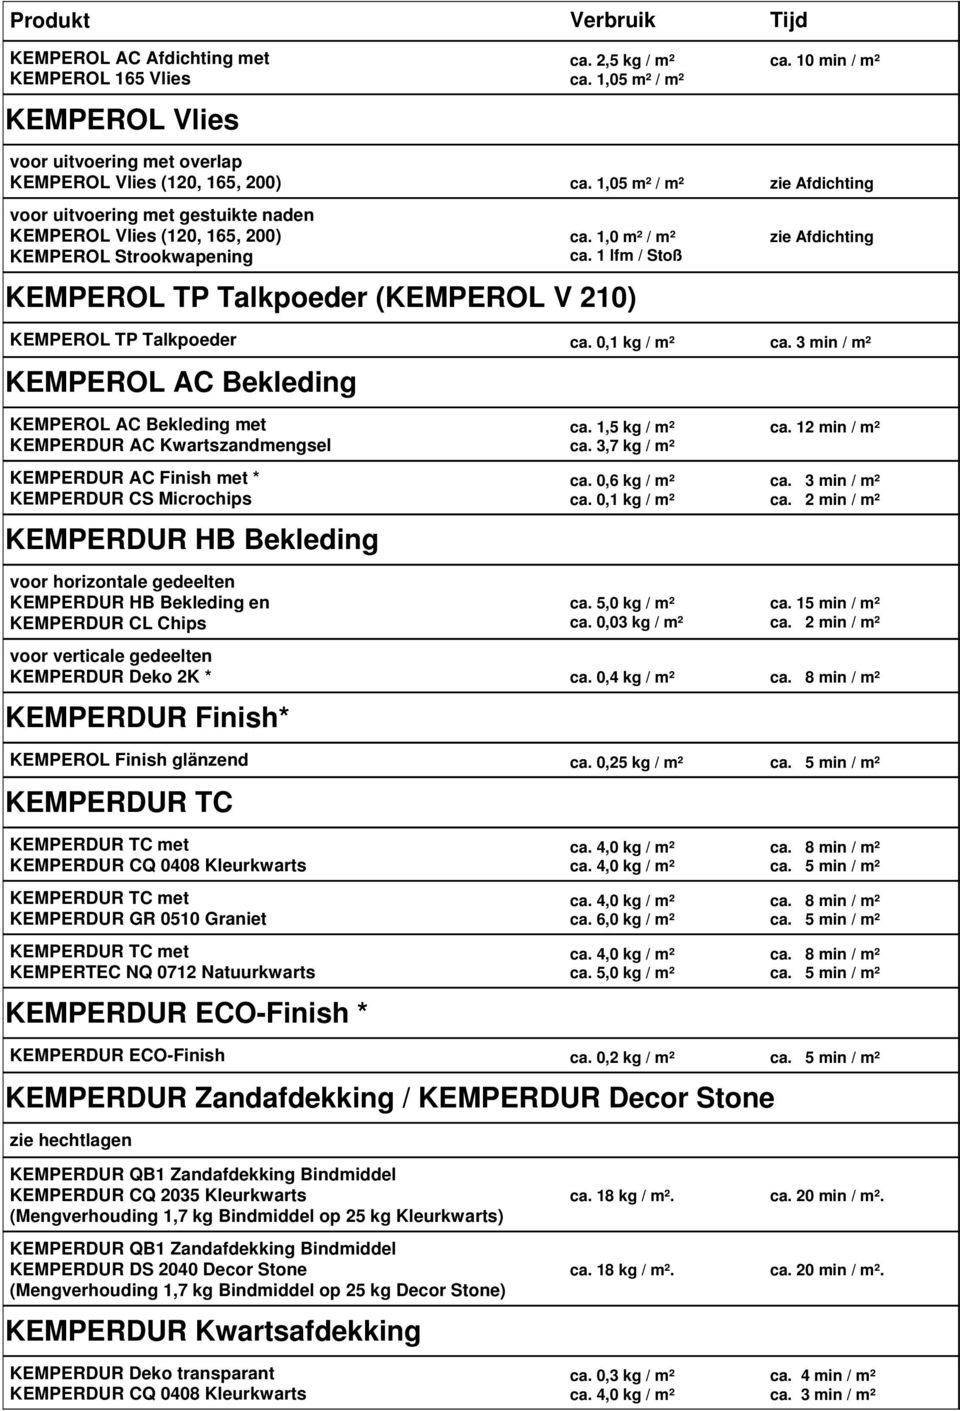 1 lfm / Stß KEMPEROL TP Talkpeder (KEMPEROL V 210) zie Afdichting KEMPEROL TP Talkpeder ca. 0,1 kg / m² ca.